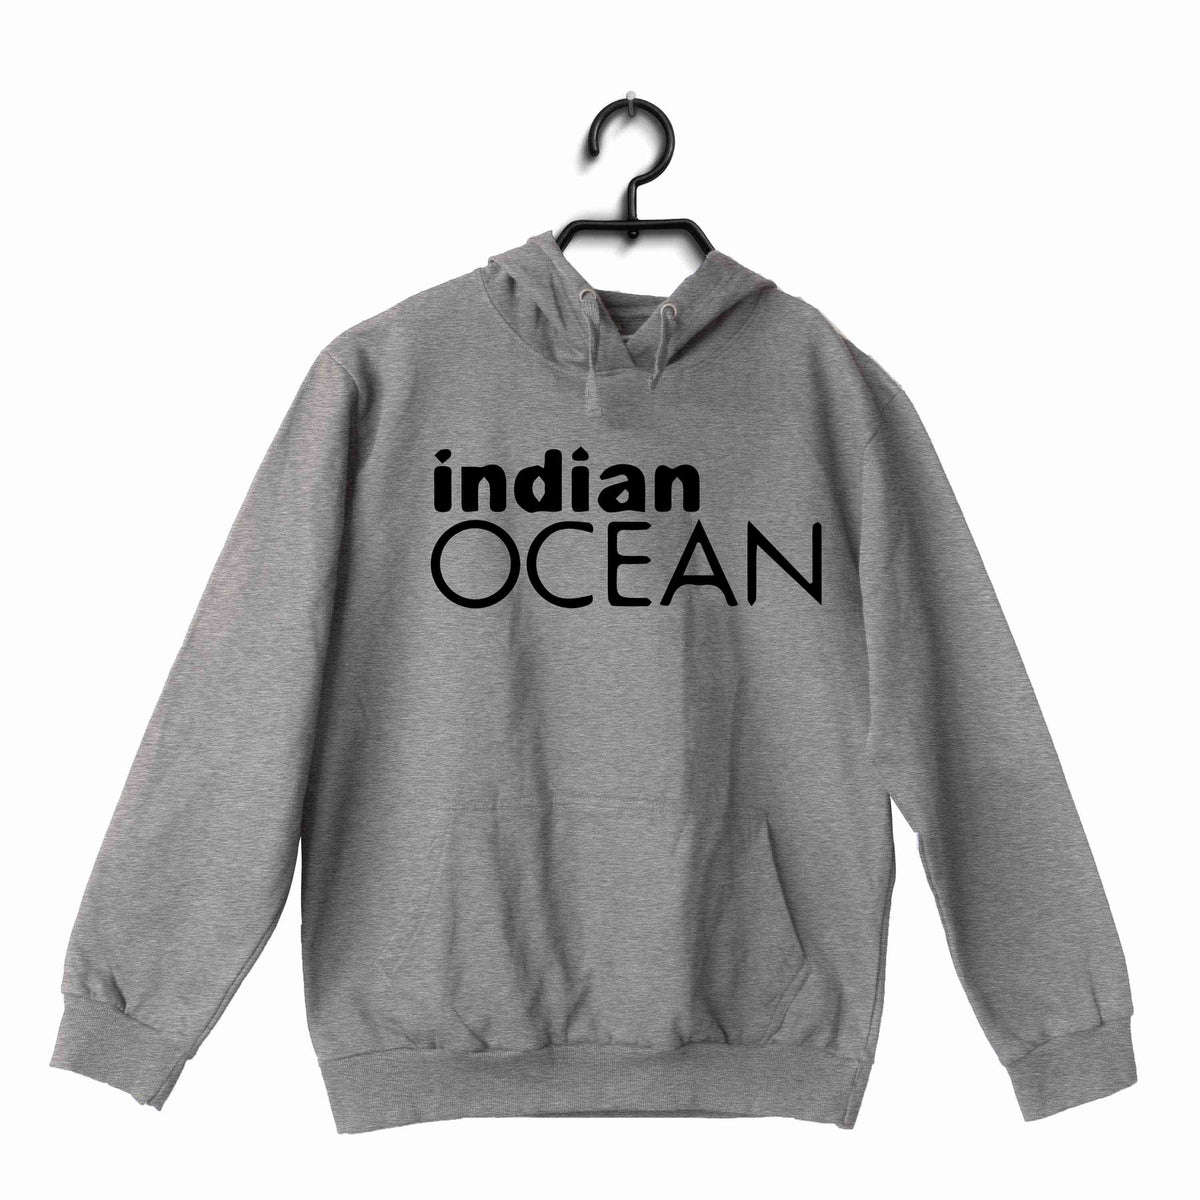 rock band hoodies india